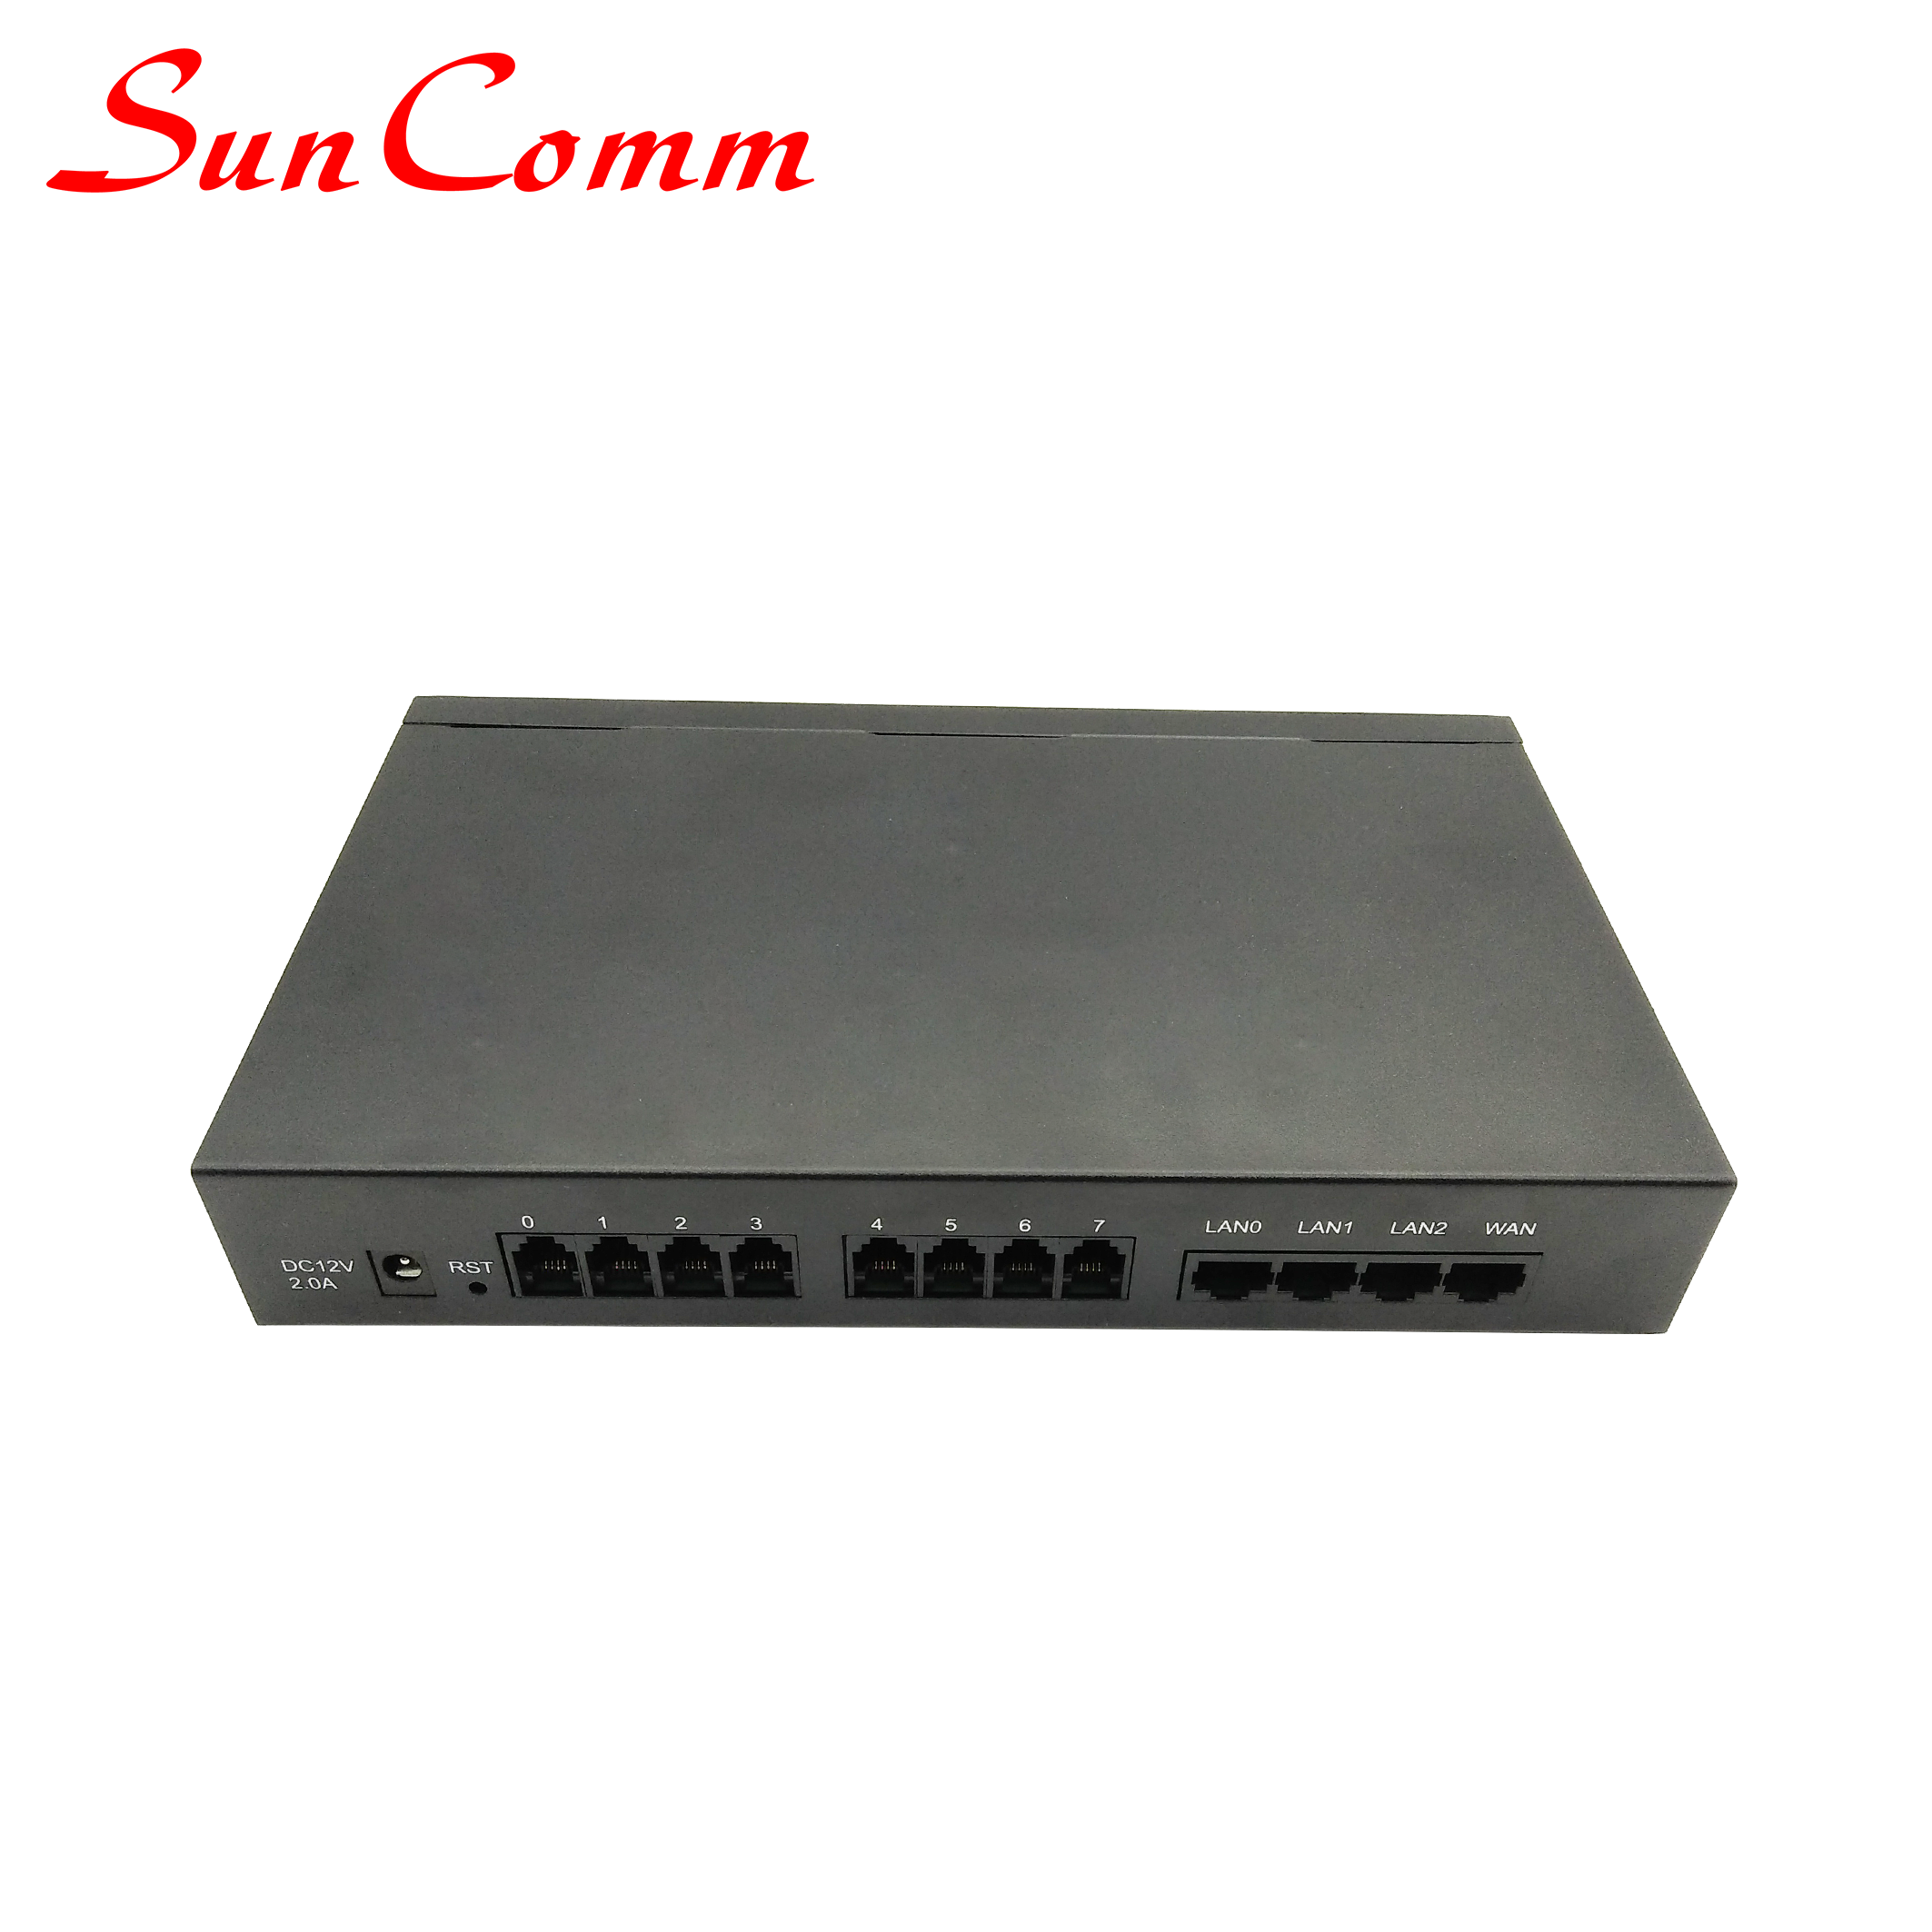 SunComm SC-08-S Analog SIP Gateway with 8 port FXS (8 RJ-11)